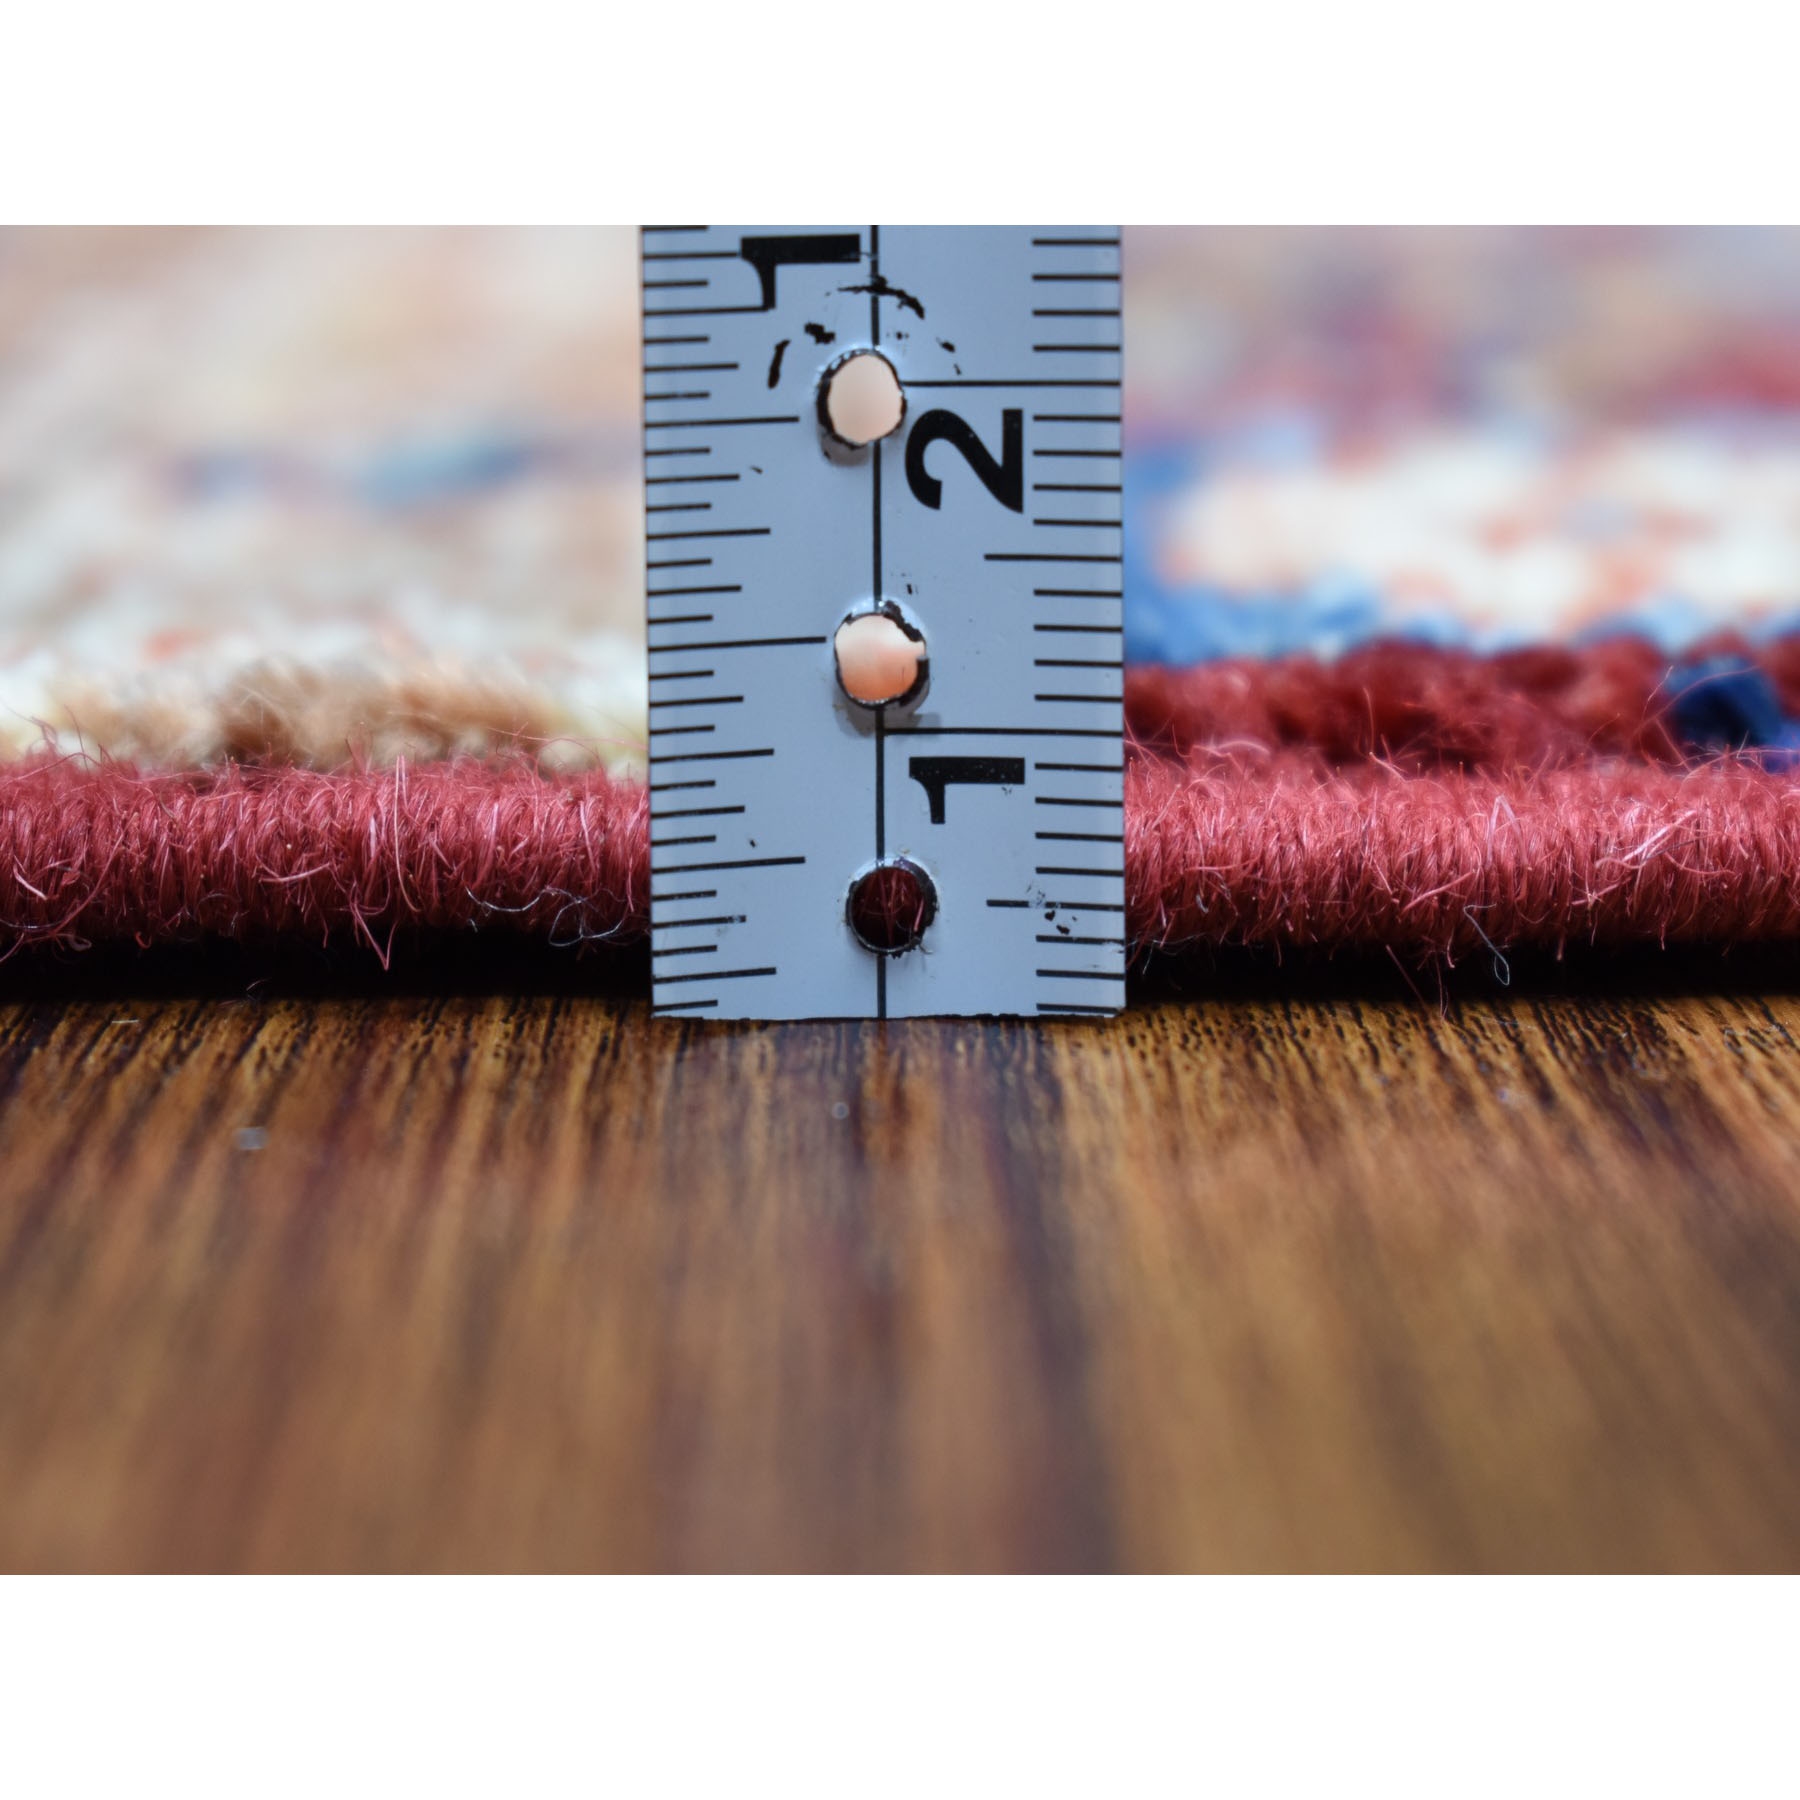 2-4 x9-9  Red Khorjin Design Runner Super Kazak Tribal Pure Wool Hand Knotted Oriental Rug 